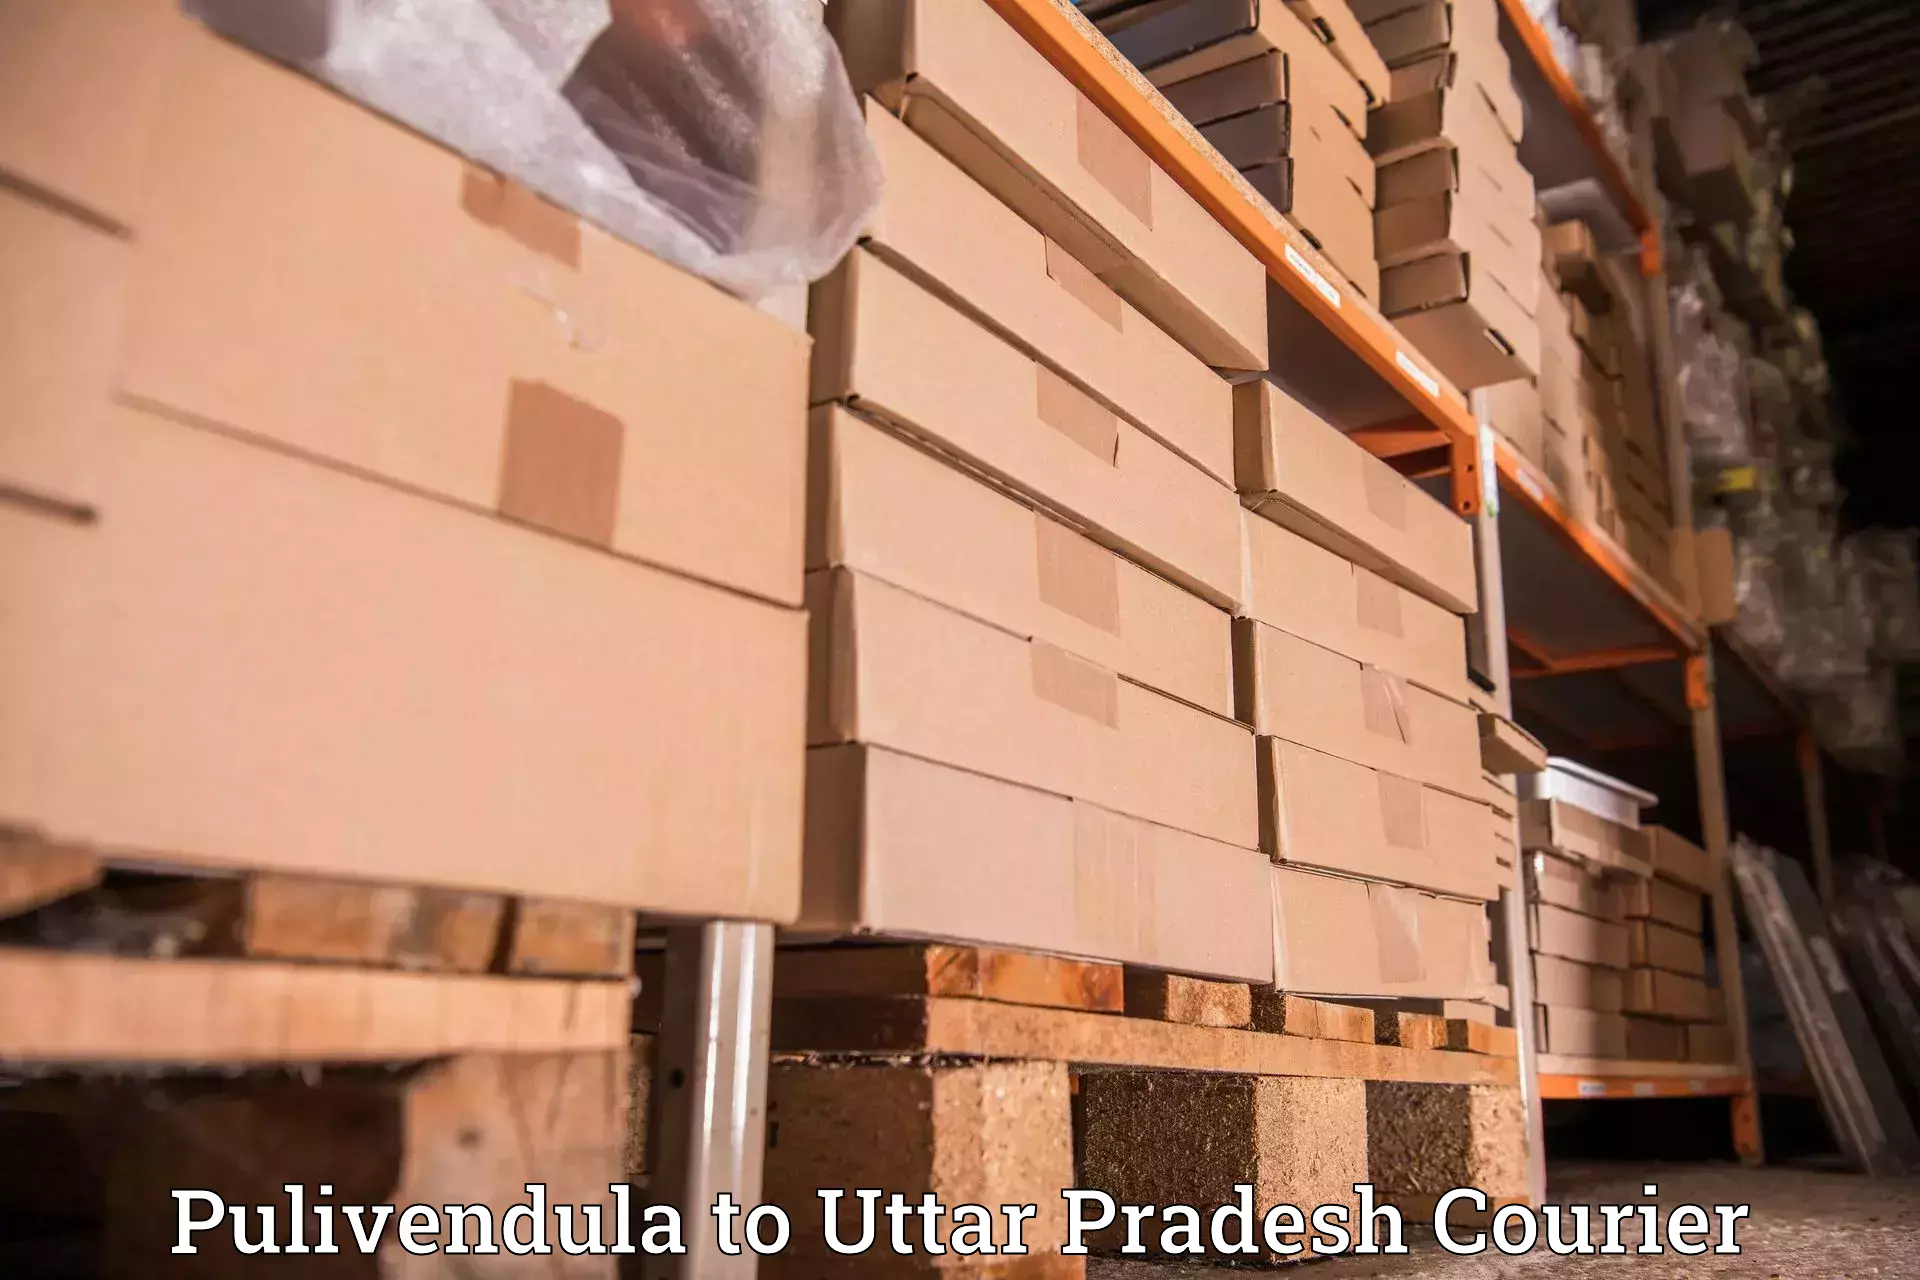 Premium delivery services Pulivendula to Aligarh Muslim University